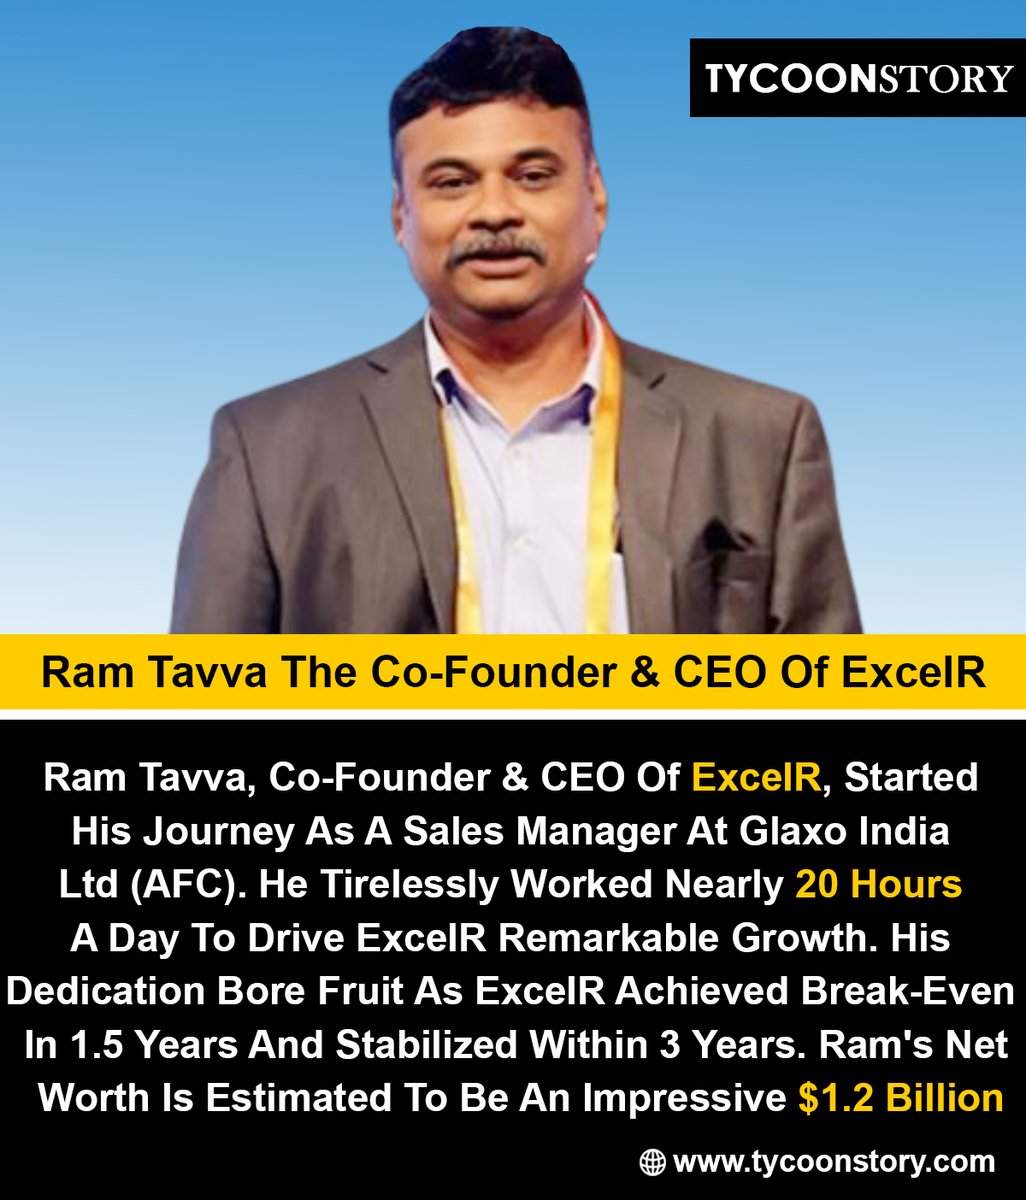 Ram Tavva The Co-Founder & CEO Of ExceIR

#RamTavva #ExceIR #CEO #StartupFounder #TechEntrepreneur #InfraredTechnology #IRInnovation #BusinessLeadership #StartupLife #EntrepreneurialJourney @exceir 

tycoonstory.com